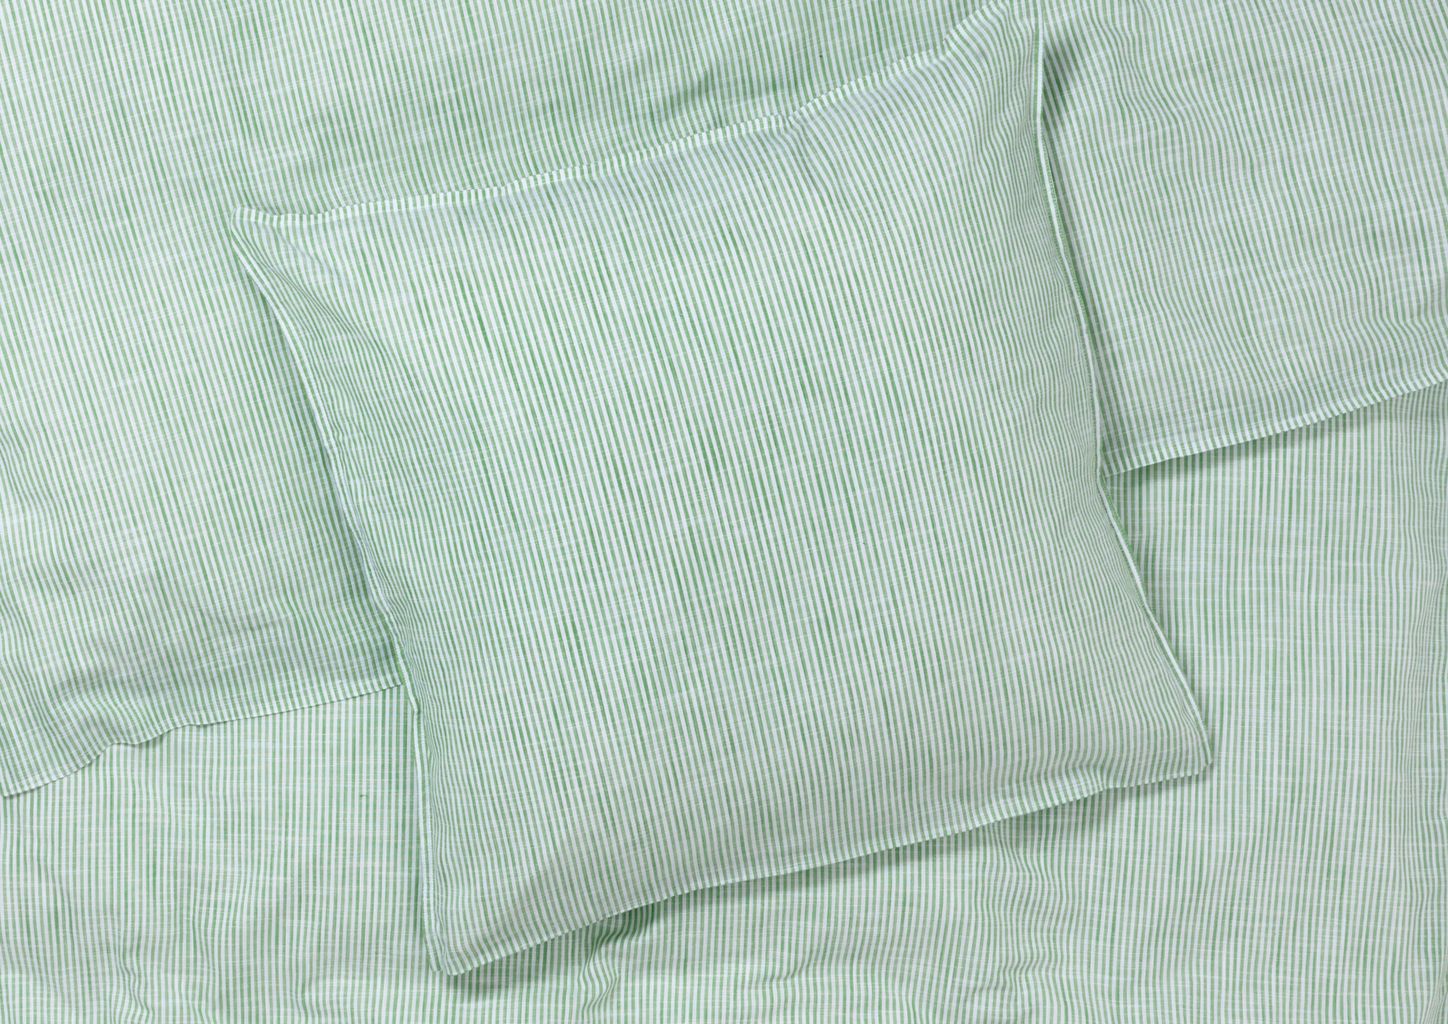 Juna Monochrome Lines Lož ložnice 200 x220 cm, zelená/bílá